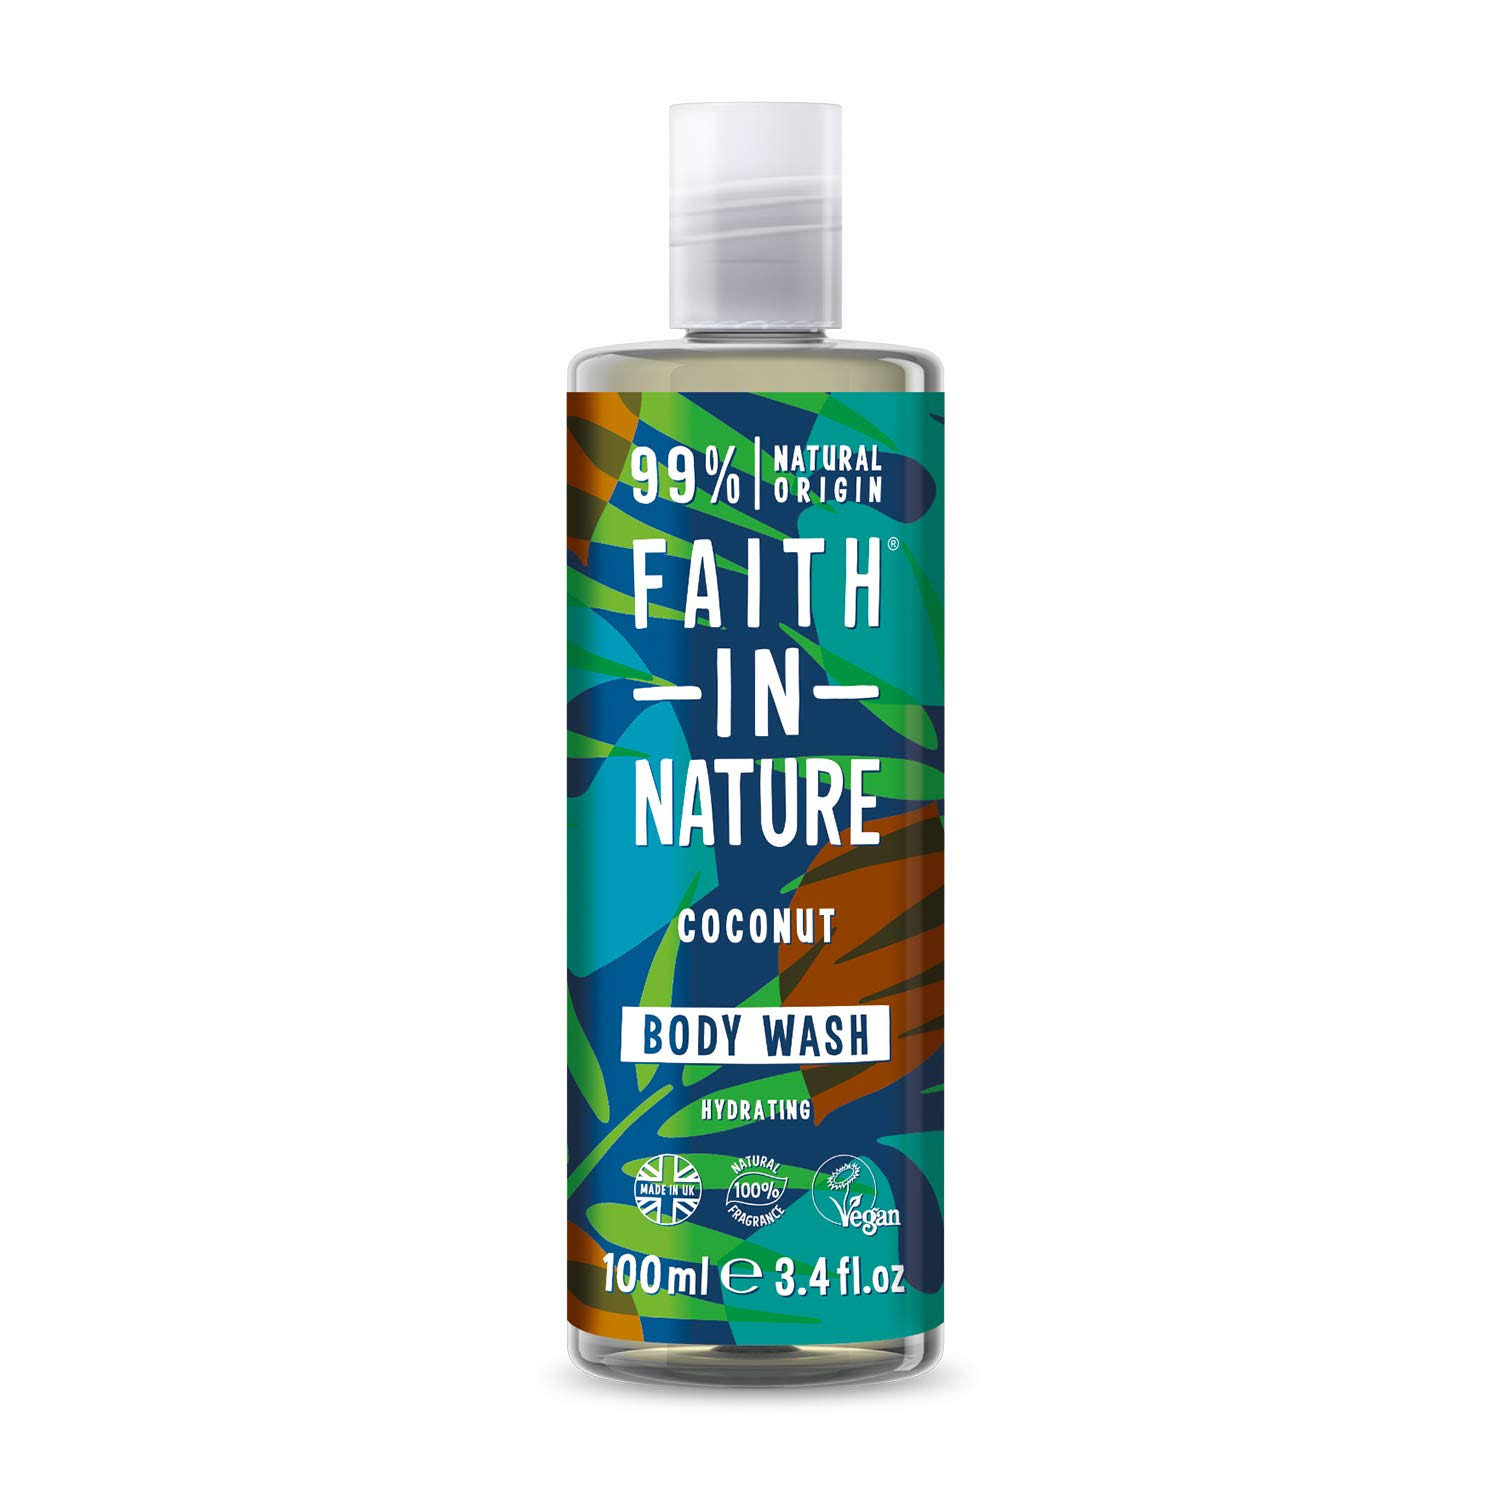 Faith in Nature Coconut Shower Gel & Bath Foam - 100ml